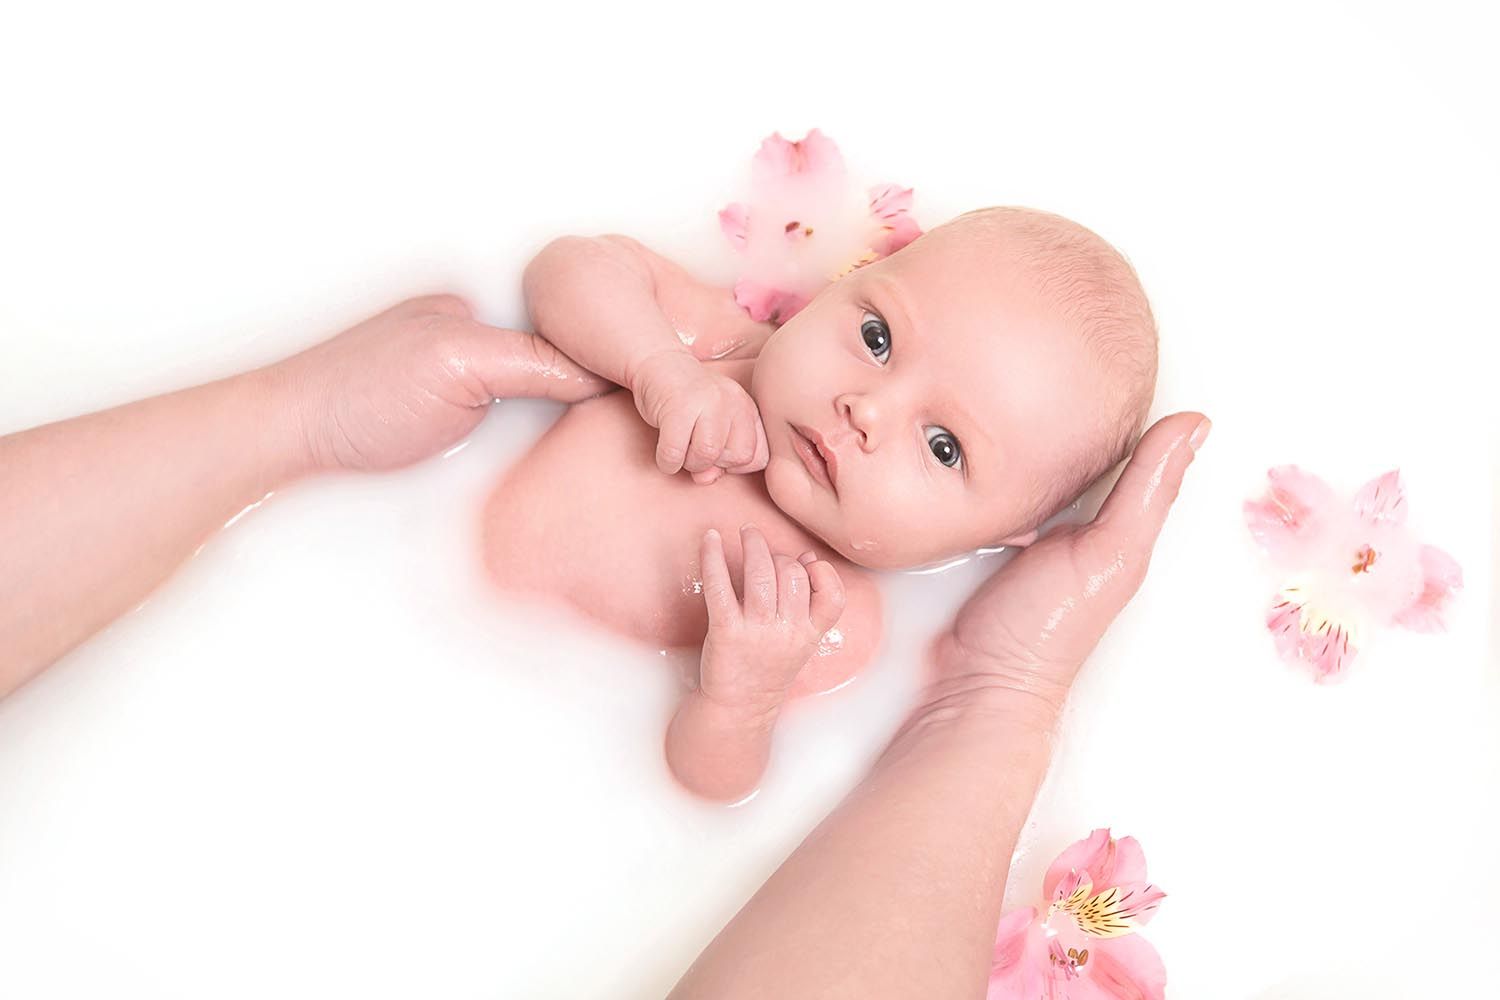 baby milk bath photo by Kaganovich Lena on shutterstock